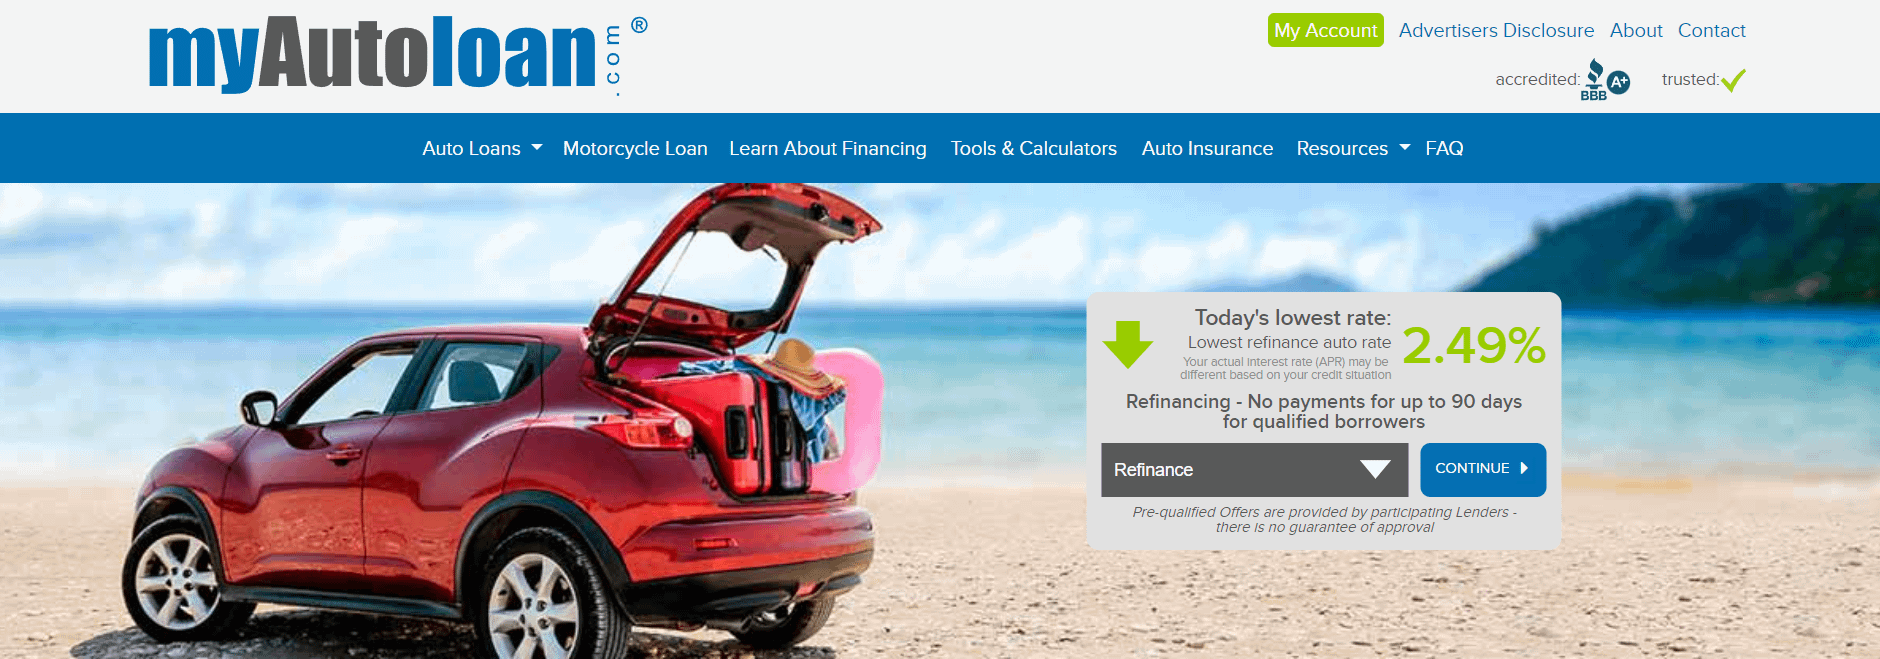 My Auto Loan auto refinance page